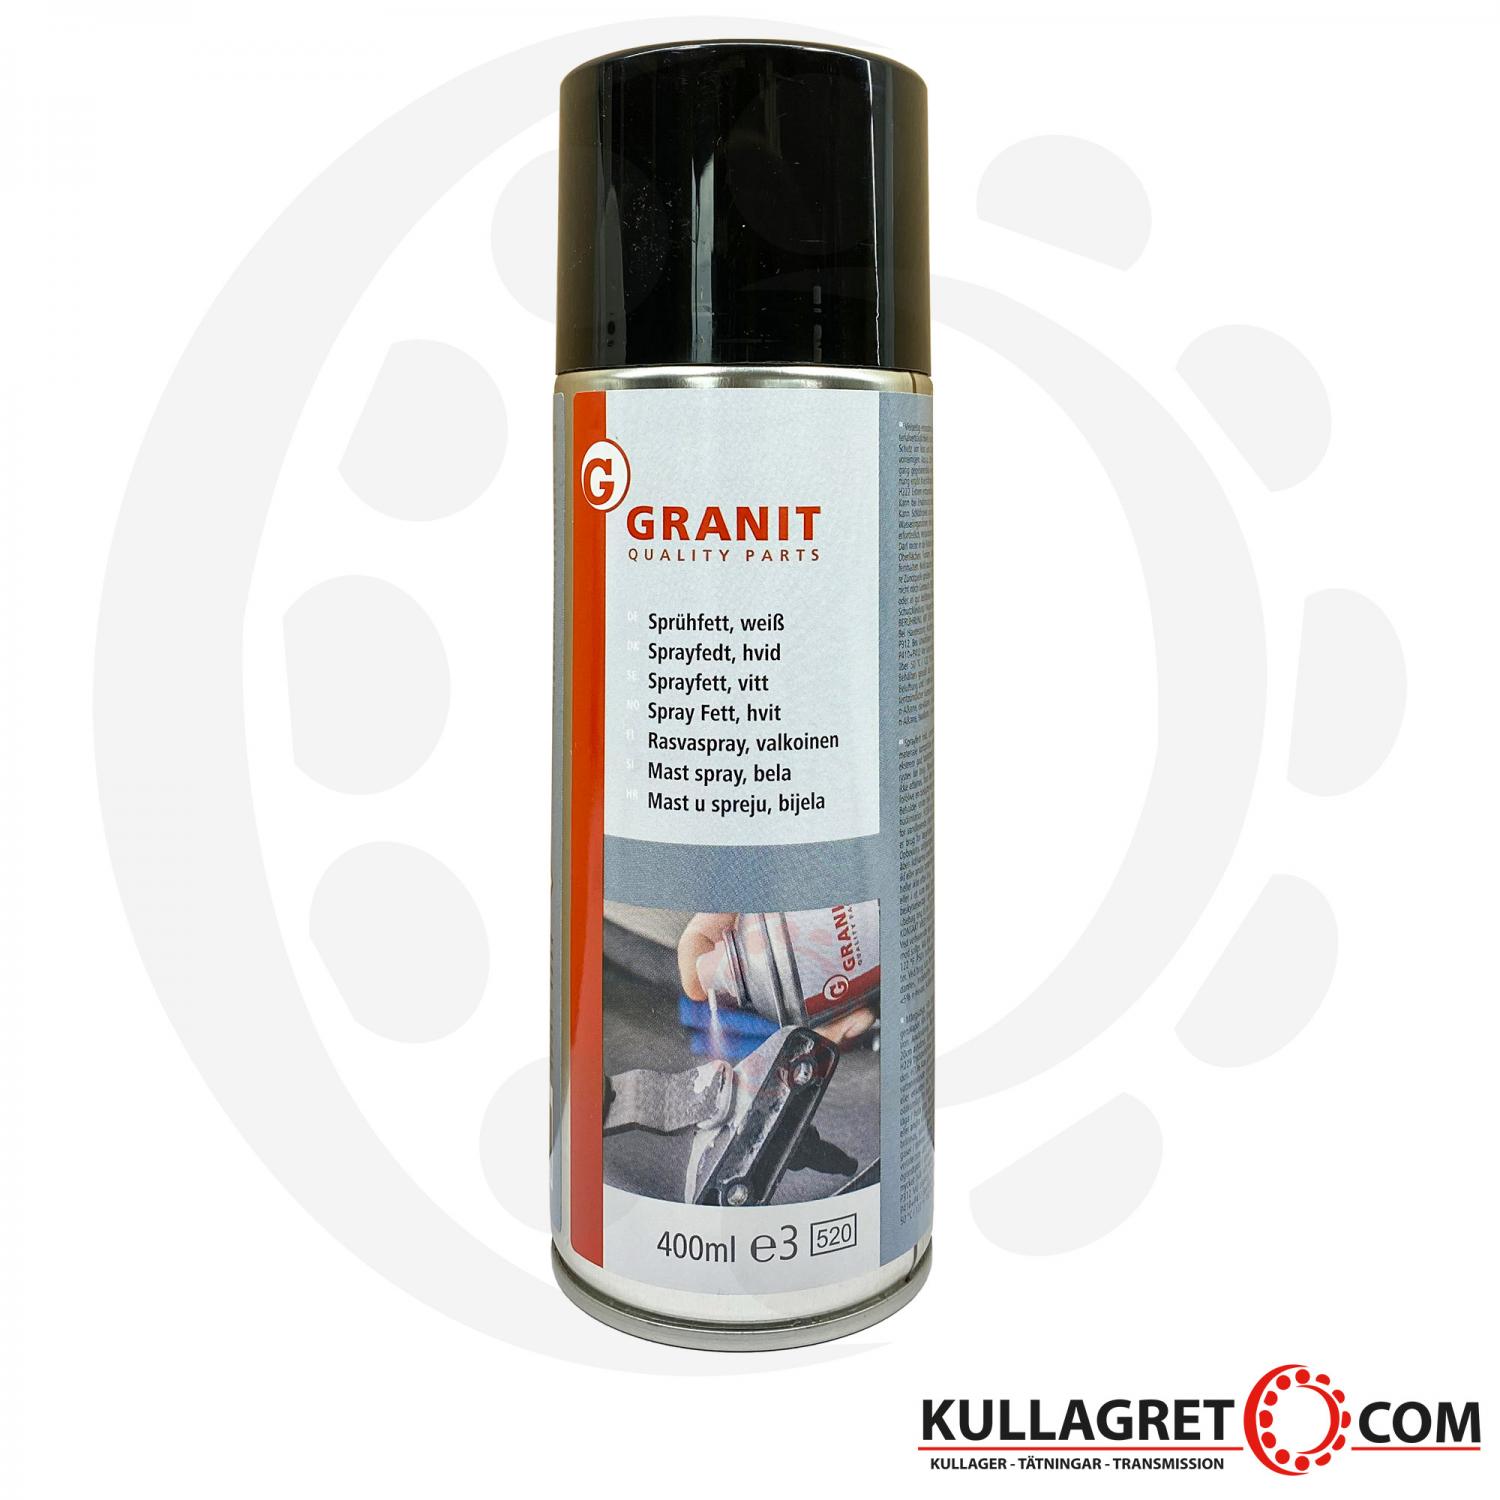 Granit Sprayfett Vitt 400ml